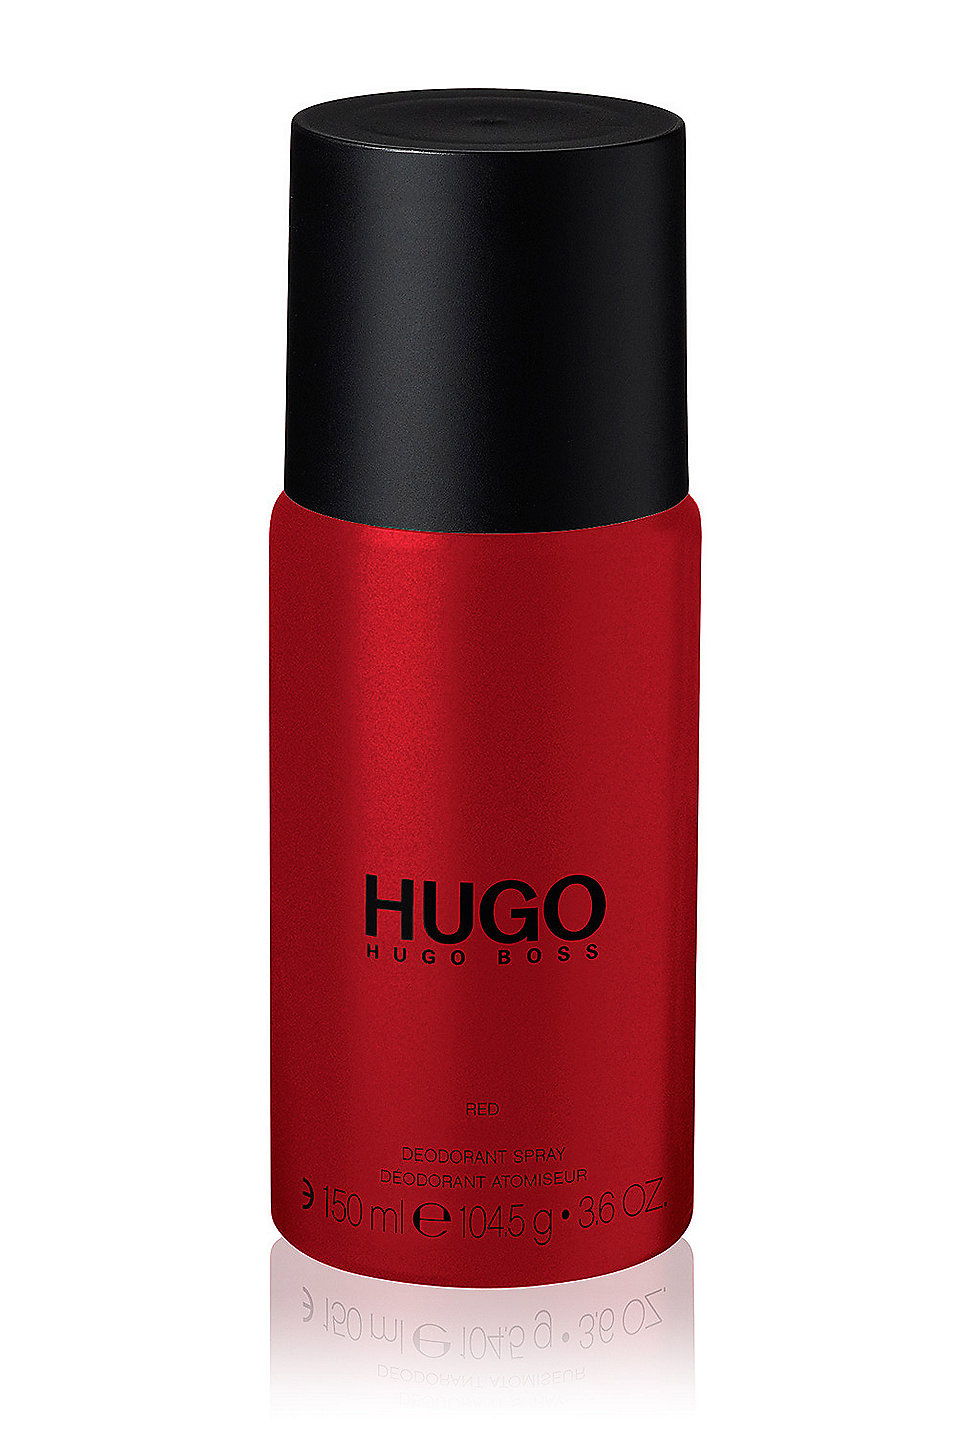 Hugo дезодорант. Хуго босс дезодорант. Дезодорант Хуго босс мужской. Hugo Red Hugo Boss для мужчин дезодорант. Парфюмированный дезодорант Хуго босс.